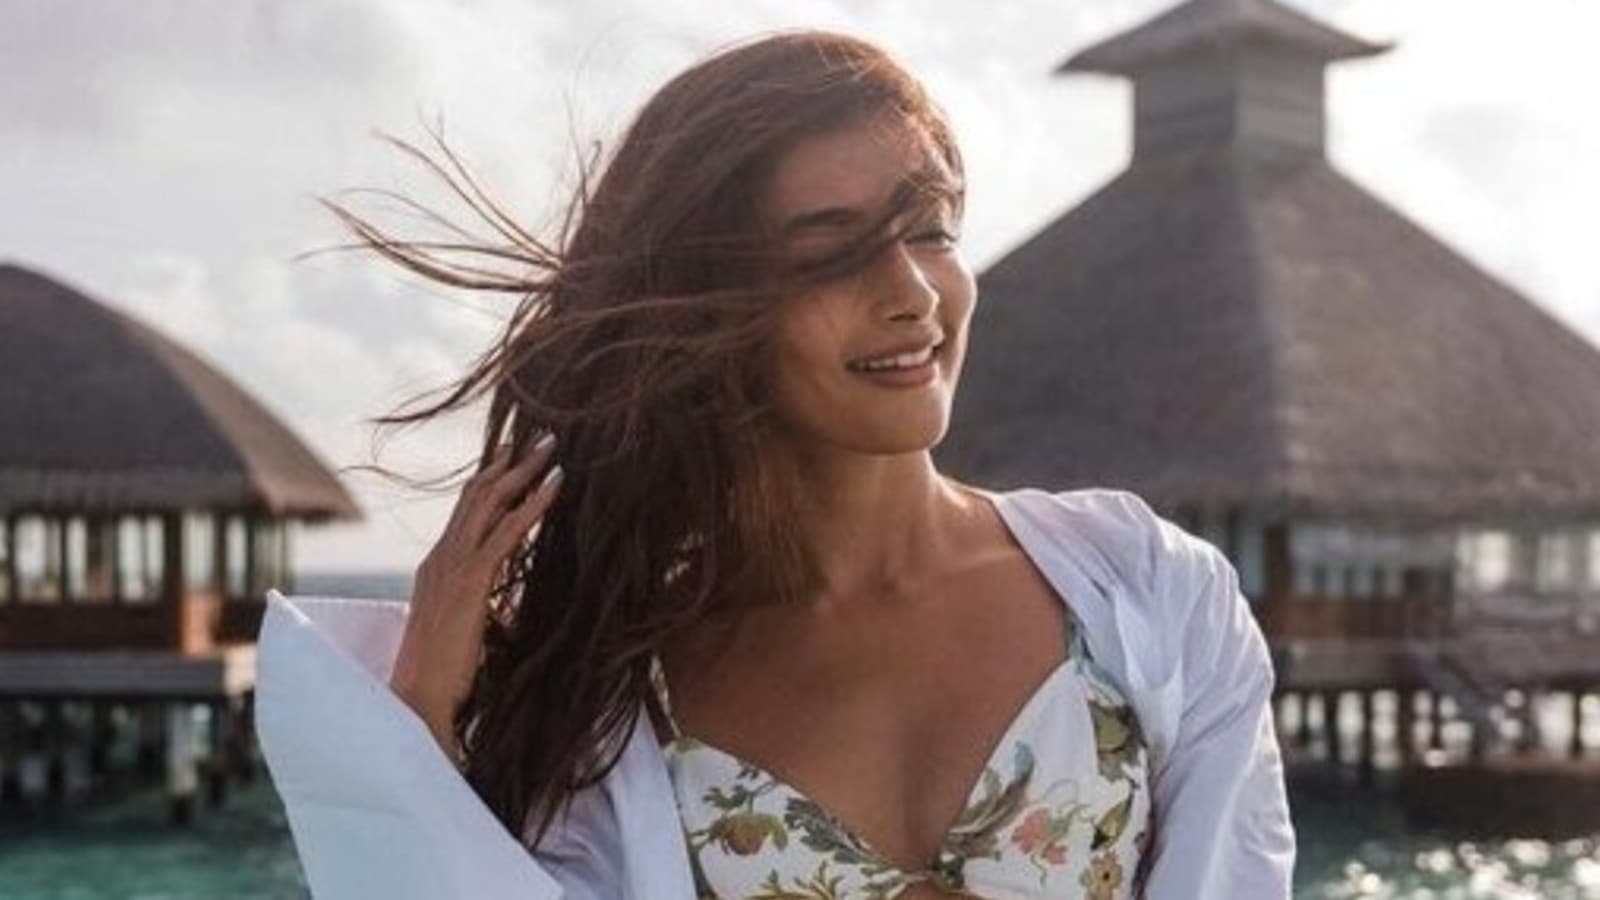 Pooja Xxx - Pooja Hegde in bikini top and shorts worth â‚¹10k enjoys wind in her hair |  Fashion Trends - Hindustan Times